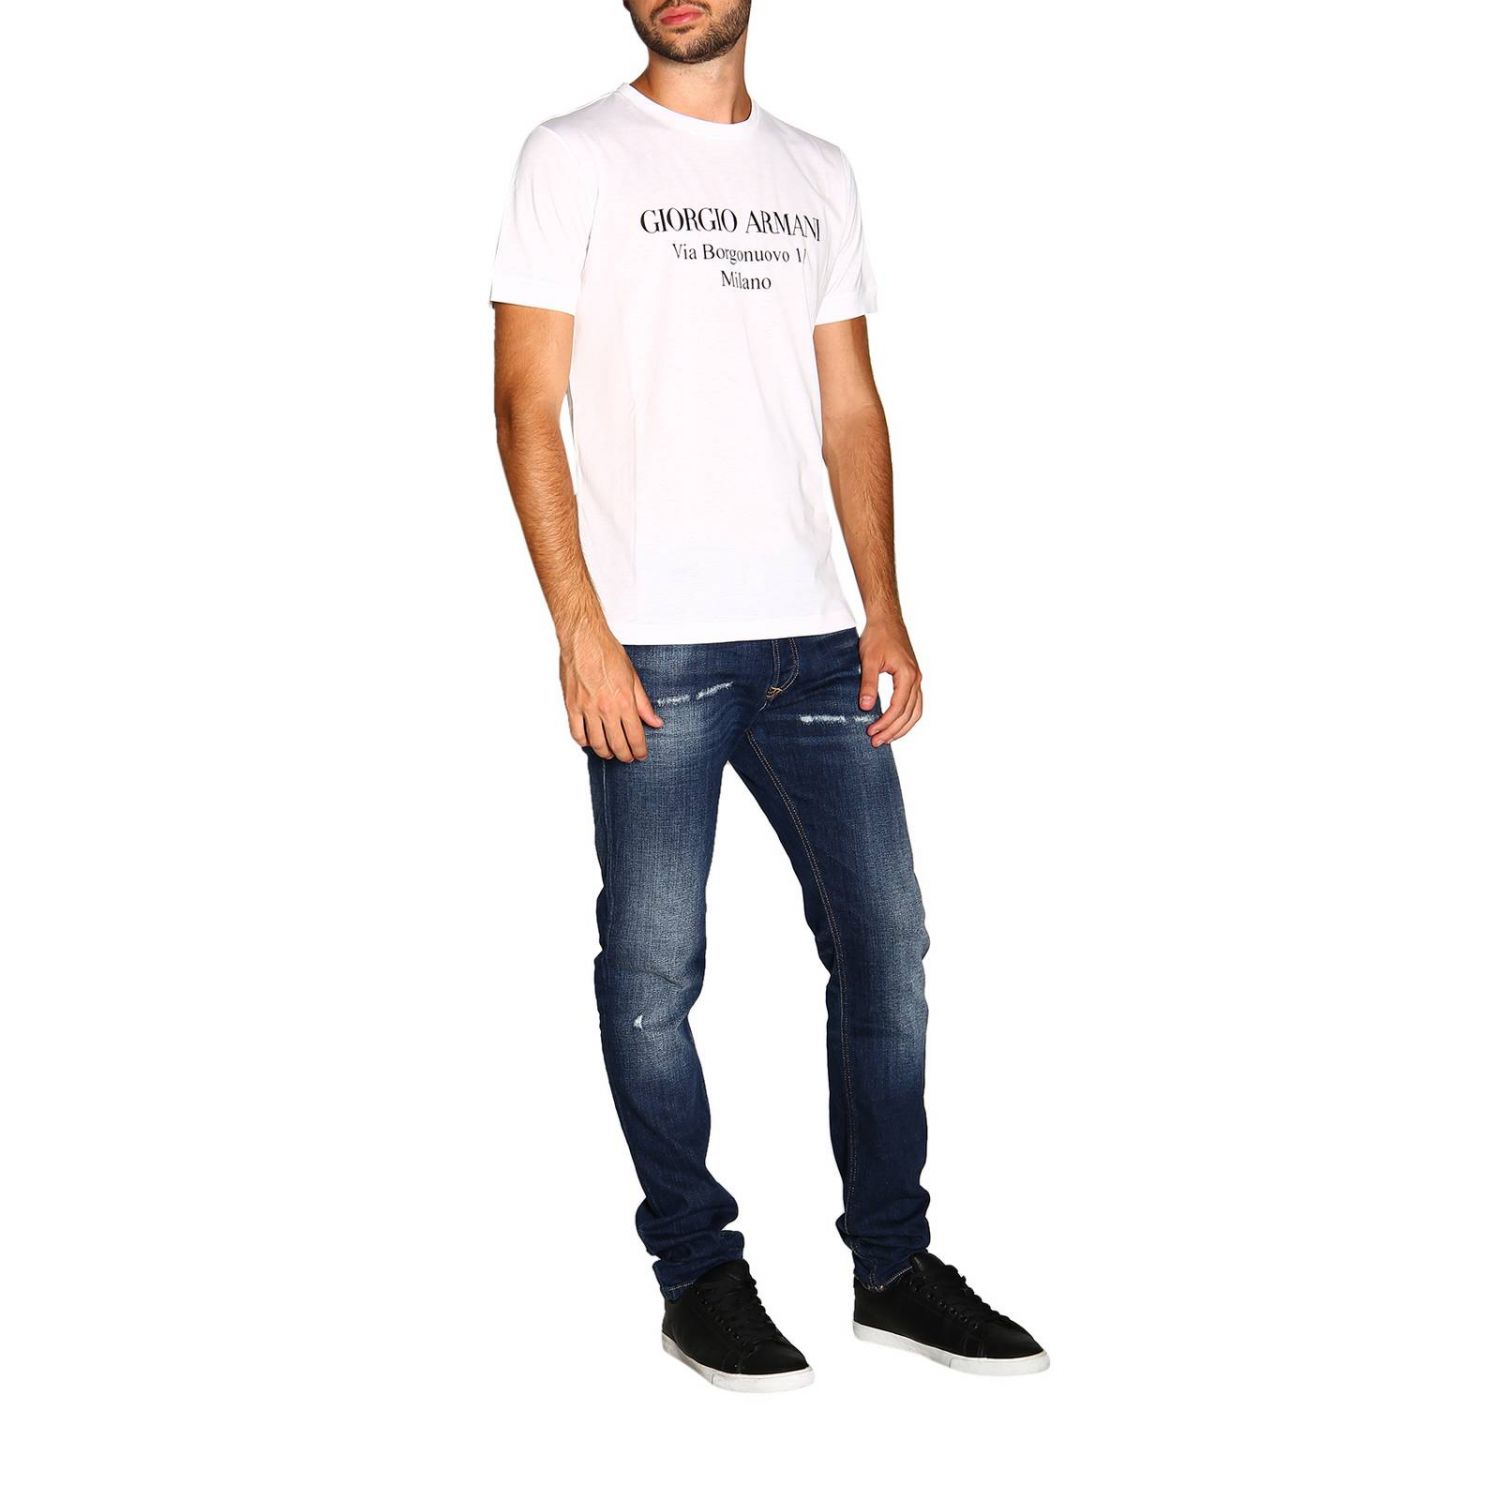 Giorgio Armani Outlet: t-shirt for men - White | Giorgio Armani t-shirt ...